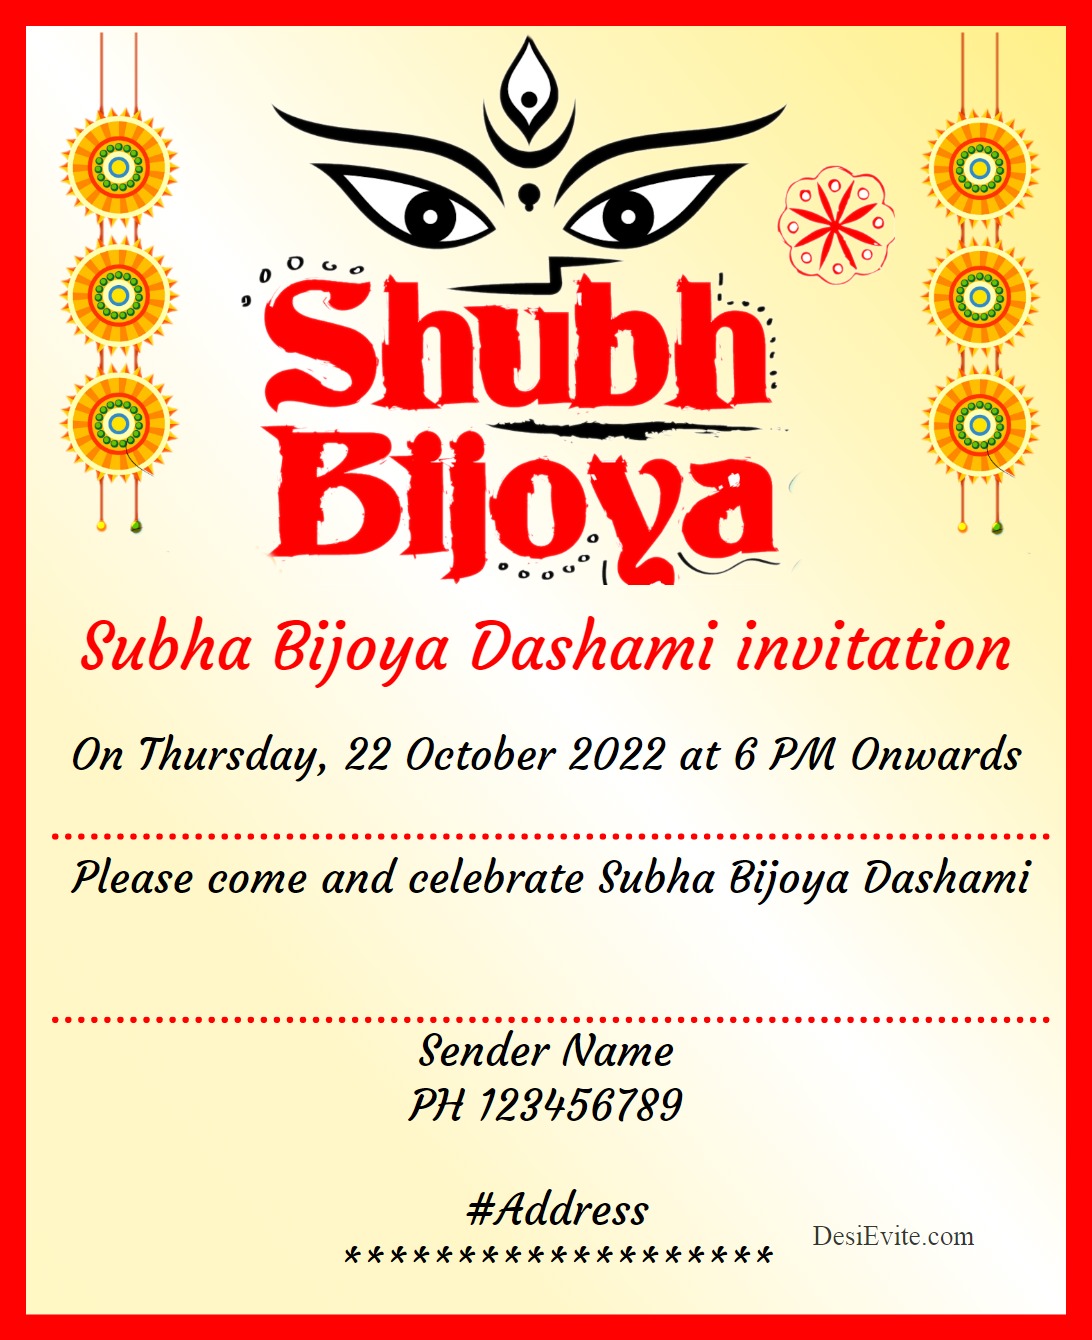 Subha Bijoya Dashami invitation card 54 